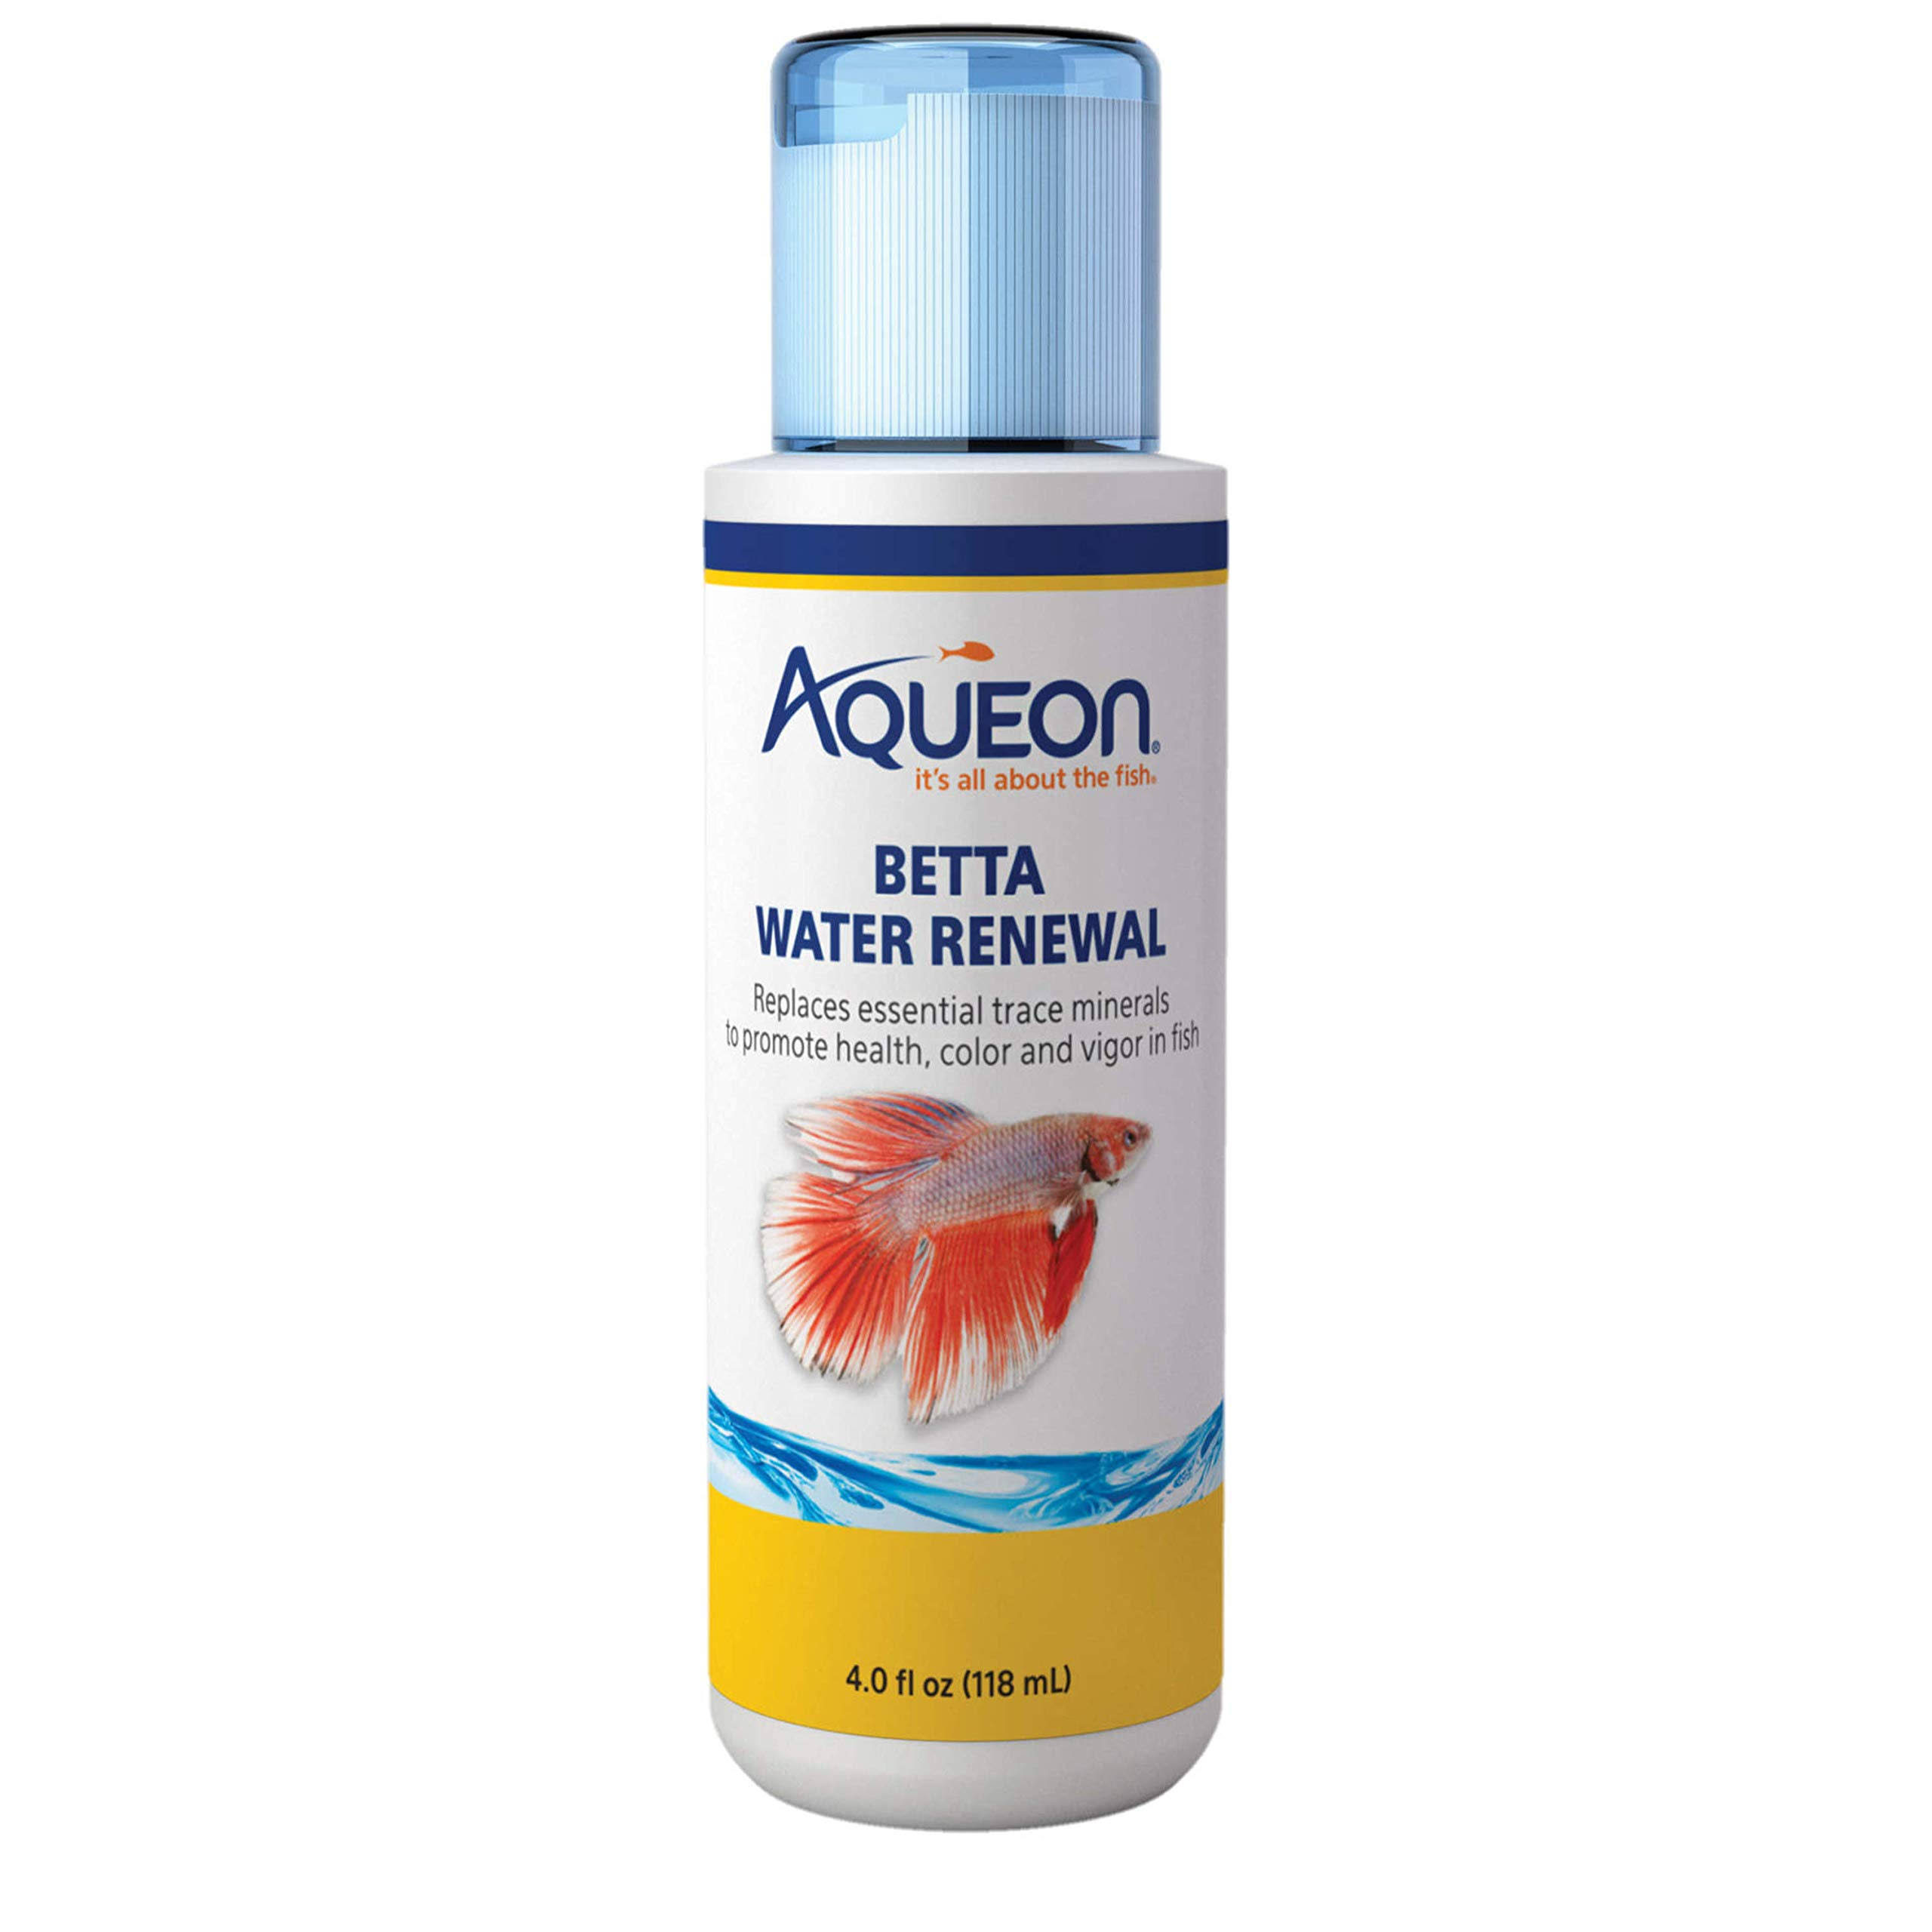 Aqueon Water Renewal Betta - 118ml